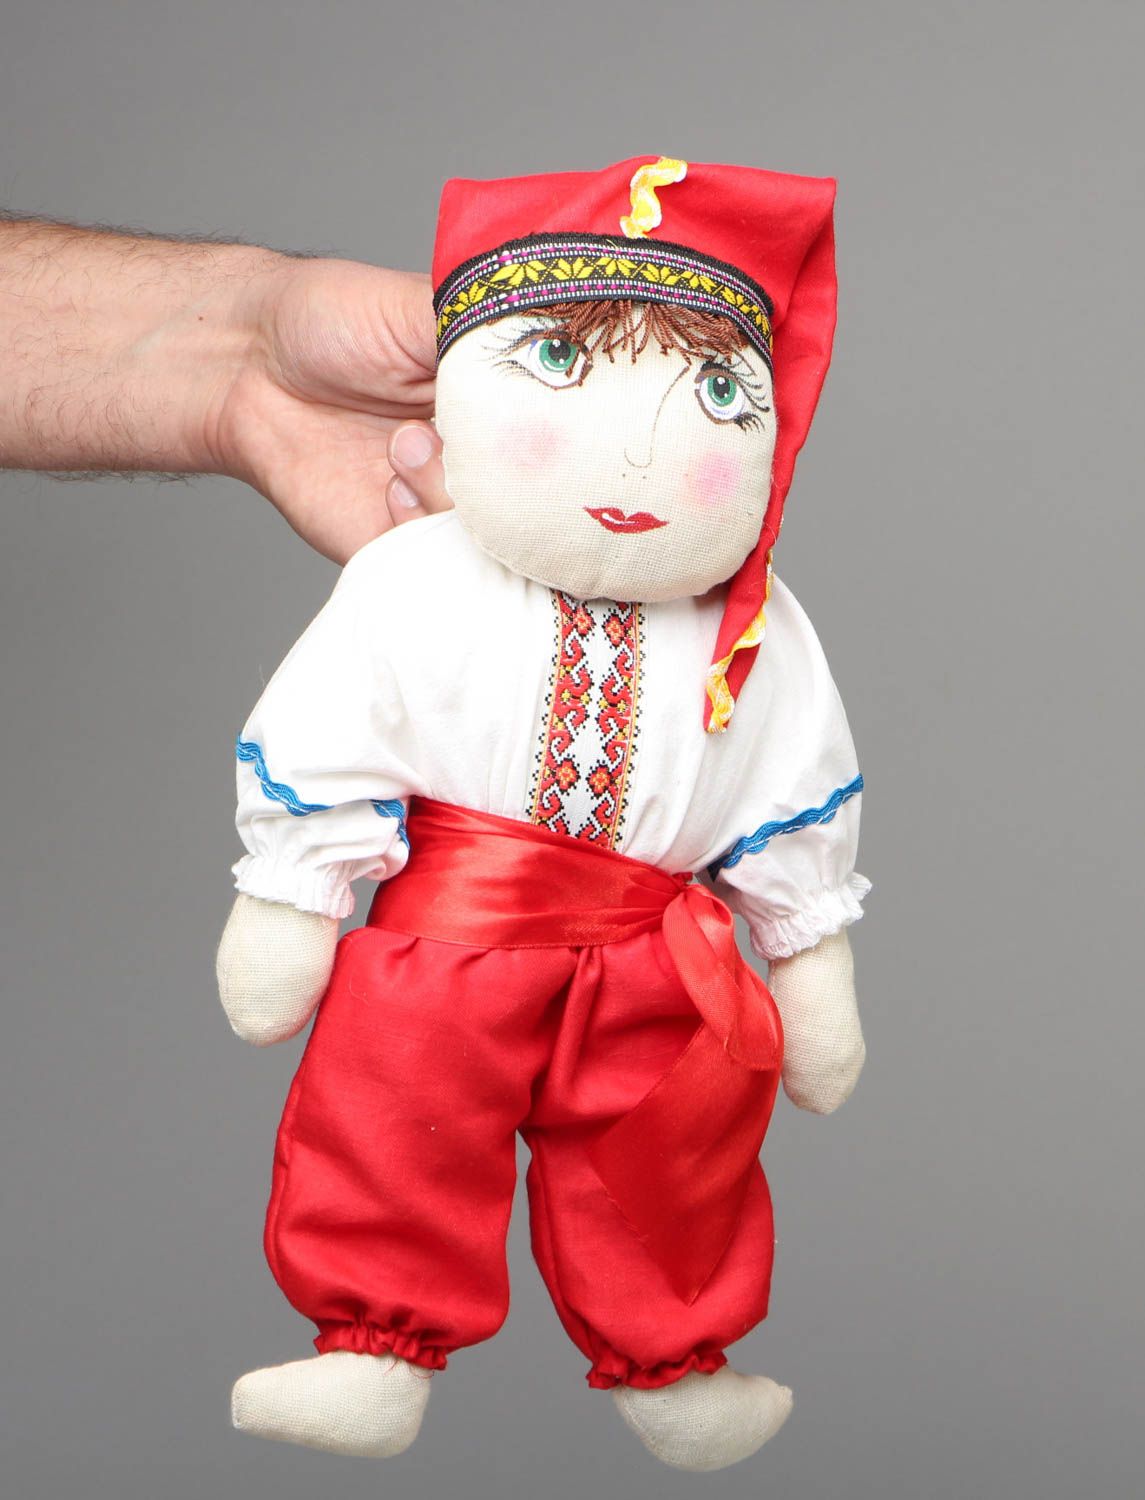 Textil Puppe handmade Kosak foto 4